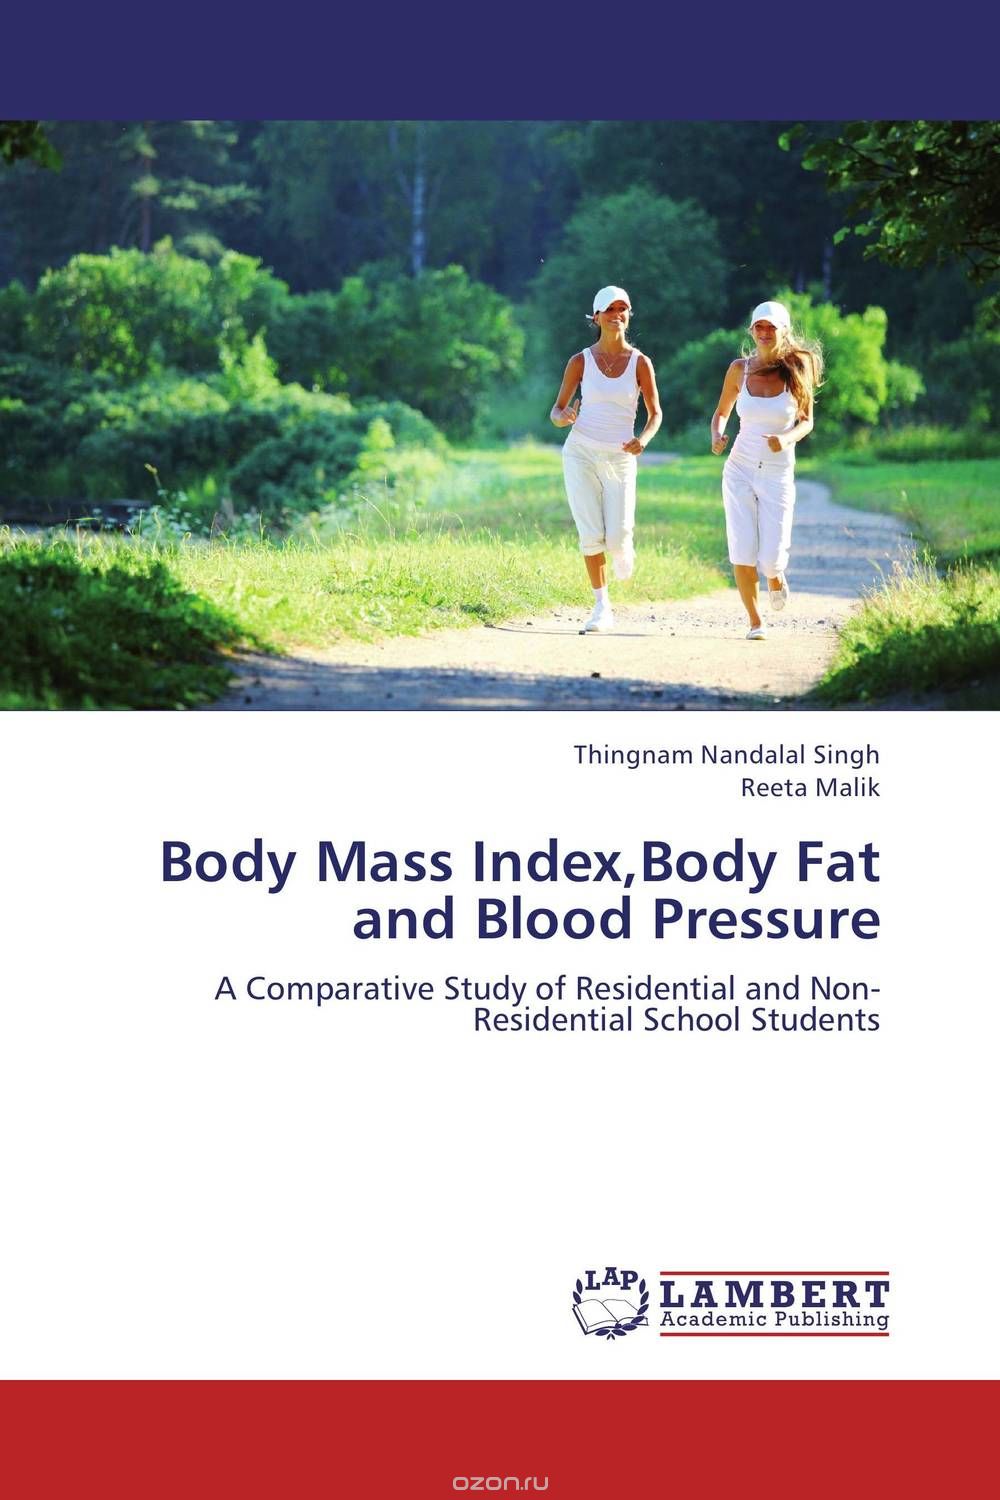 Скачать книгу "Body Mass Index,Body Fat and Blood Pressure"